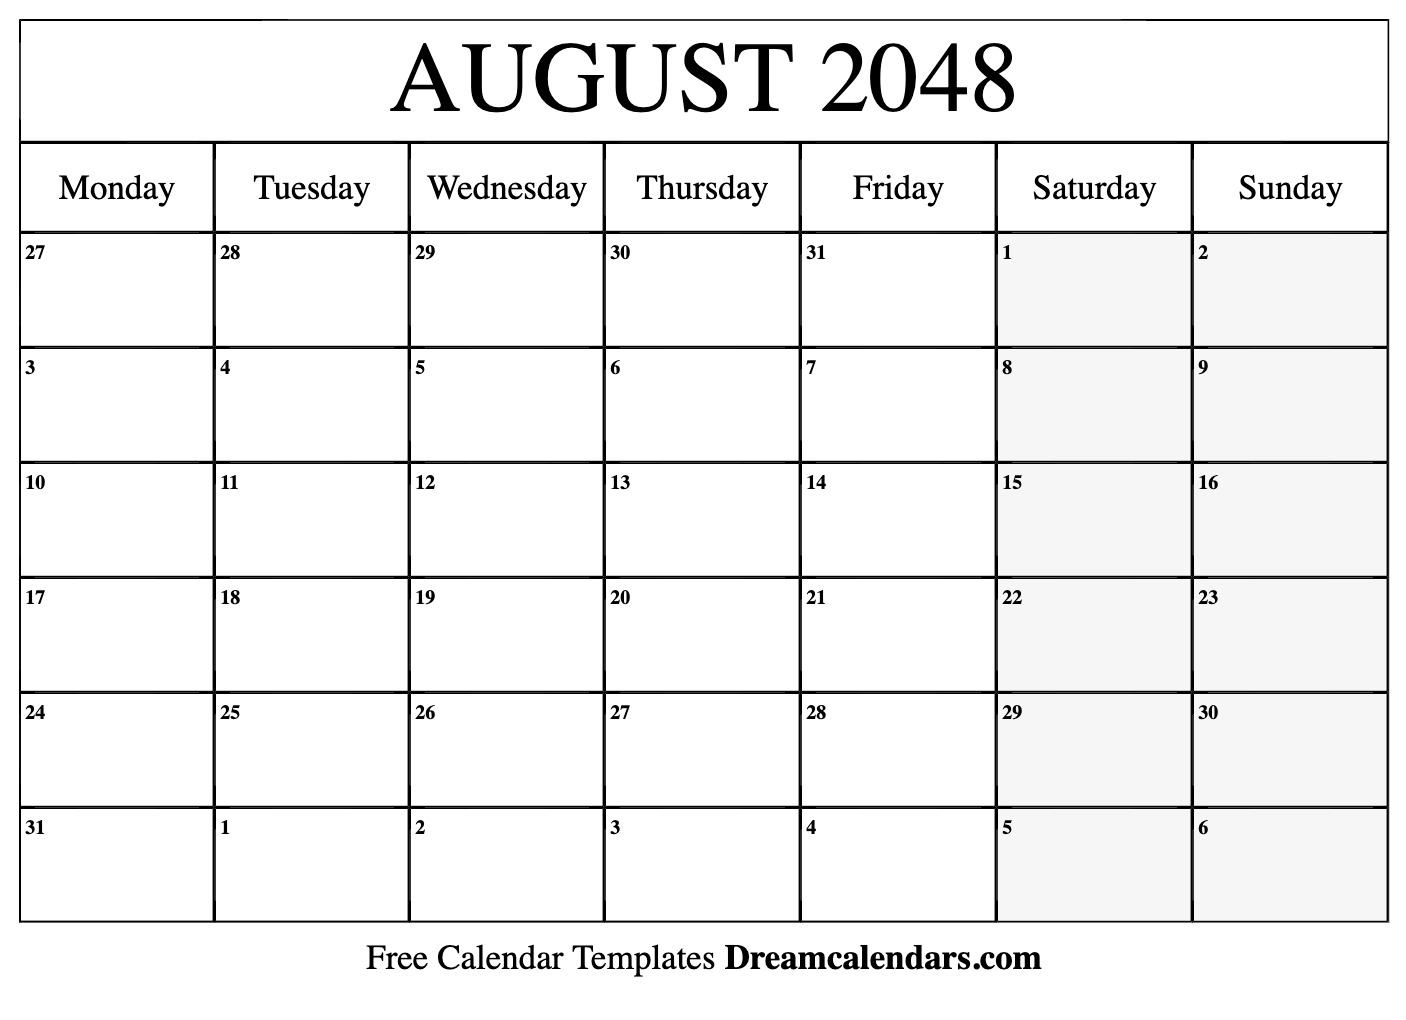 August 2048 calendar free blank printable templates